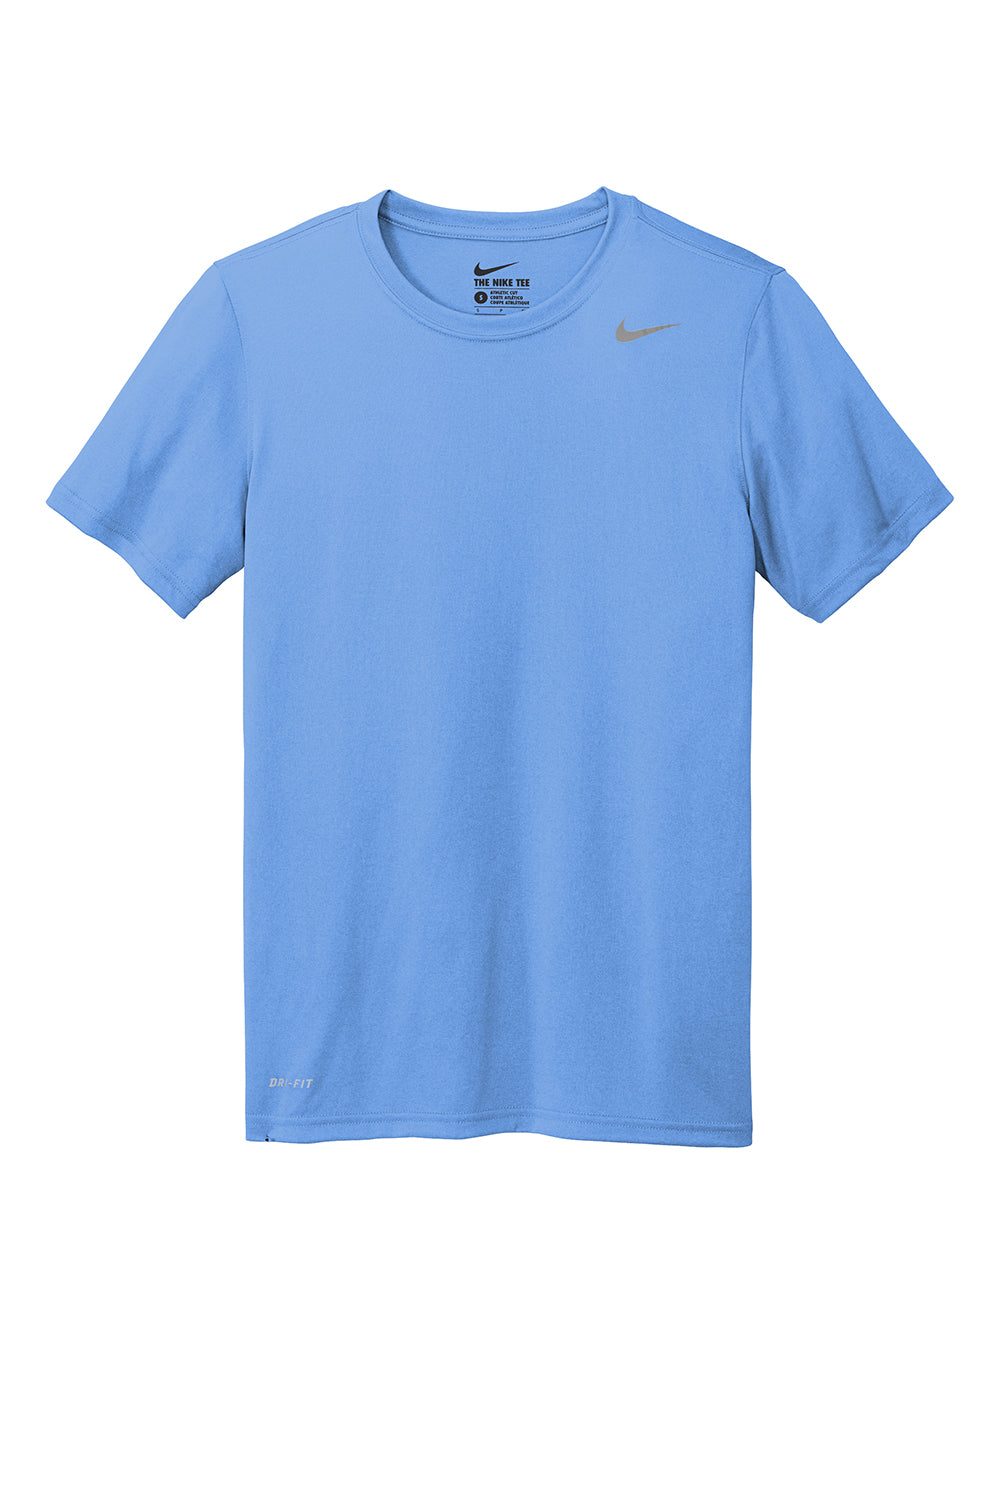 Nike DV7299 Mens Team rLegend Dri-Fit Moisture Wicking Short Sleeve Crewneck T-Shirt Valor Blue Flat Front